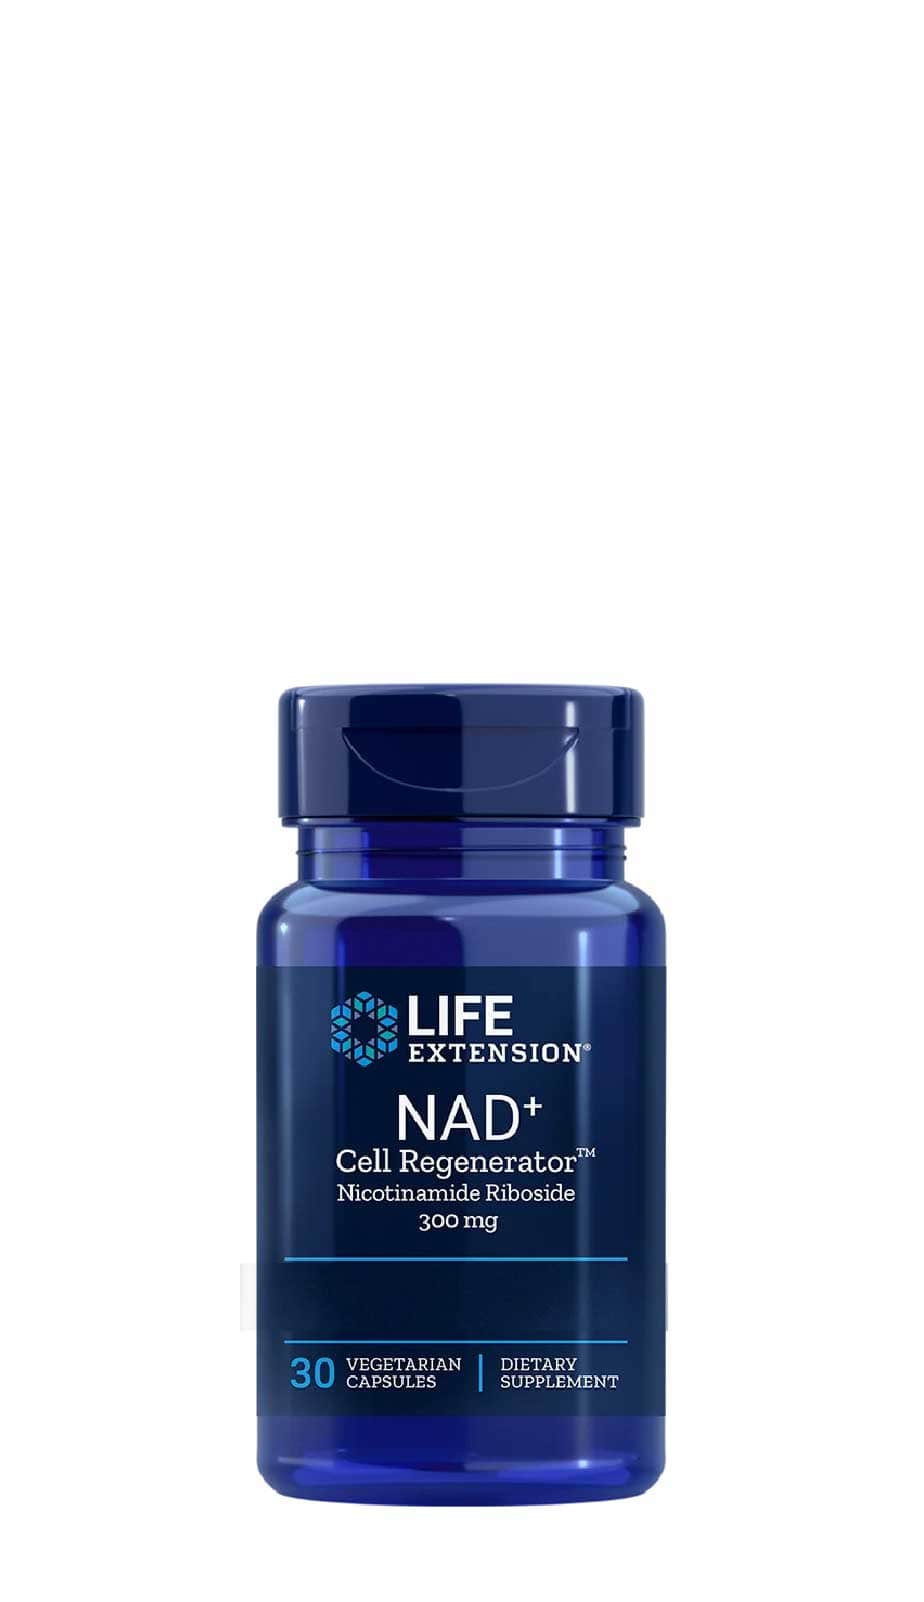 Life Extension NAD+ Cell Regenerator bei LiveHelfi kaufen